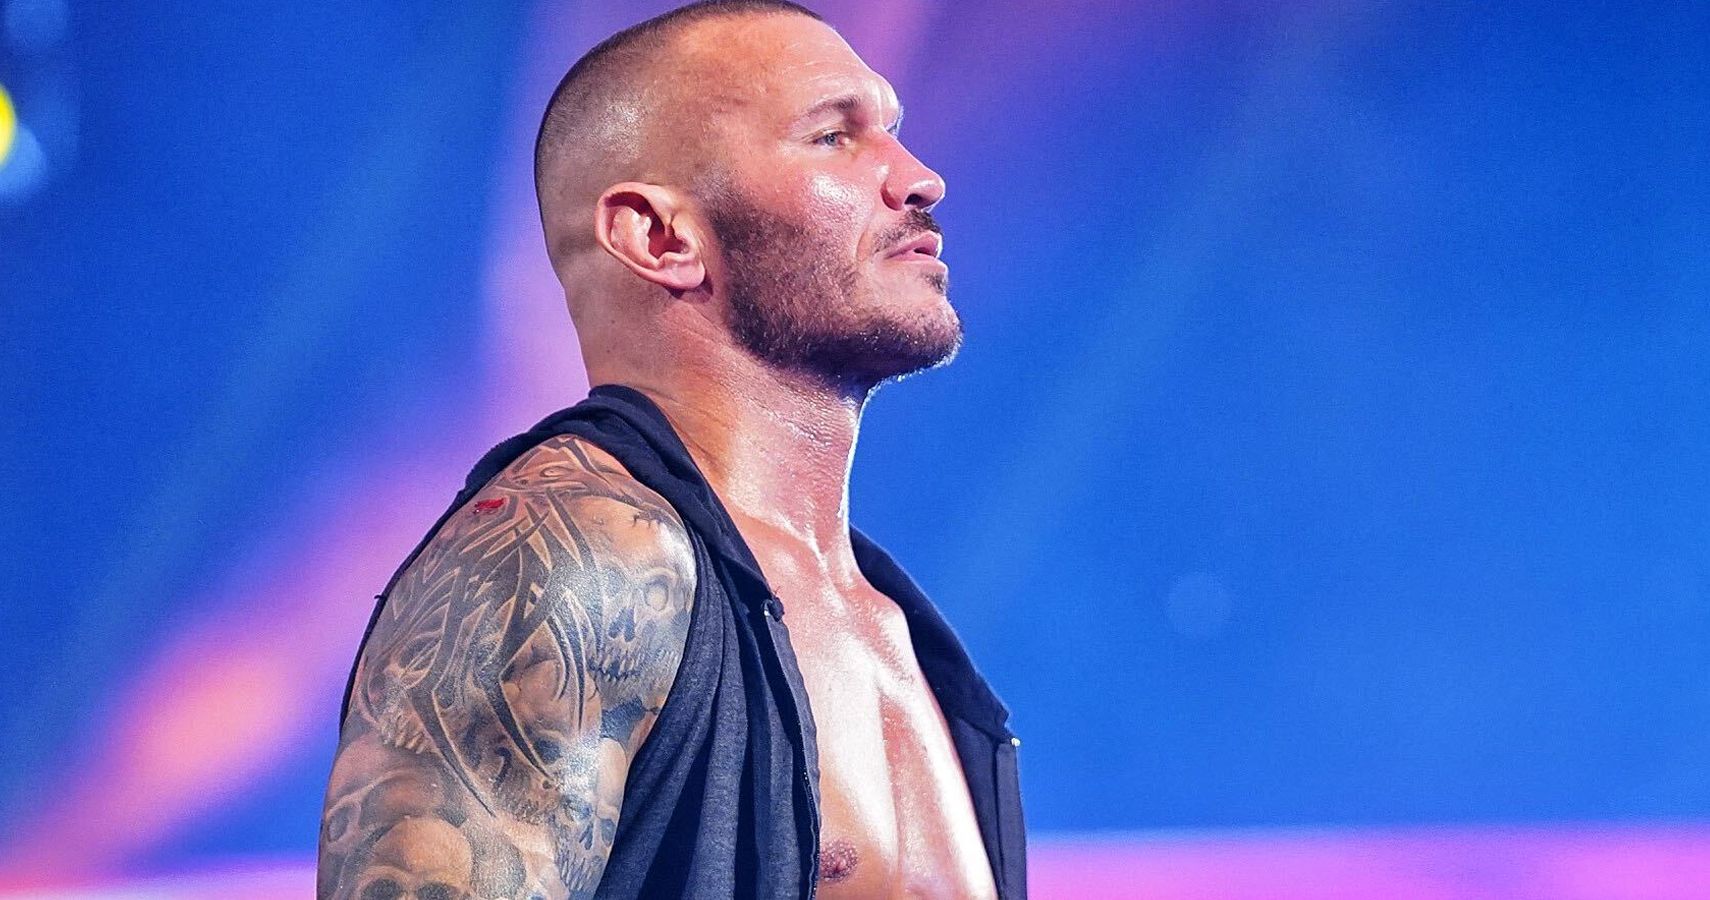 Randy Orton profile